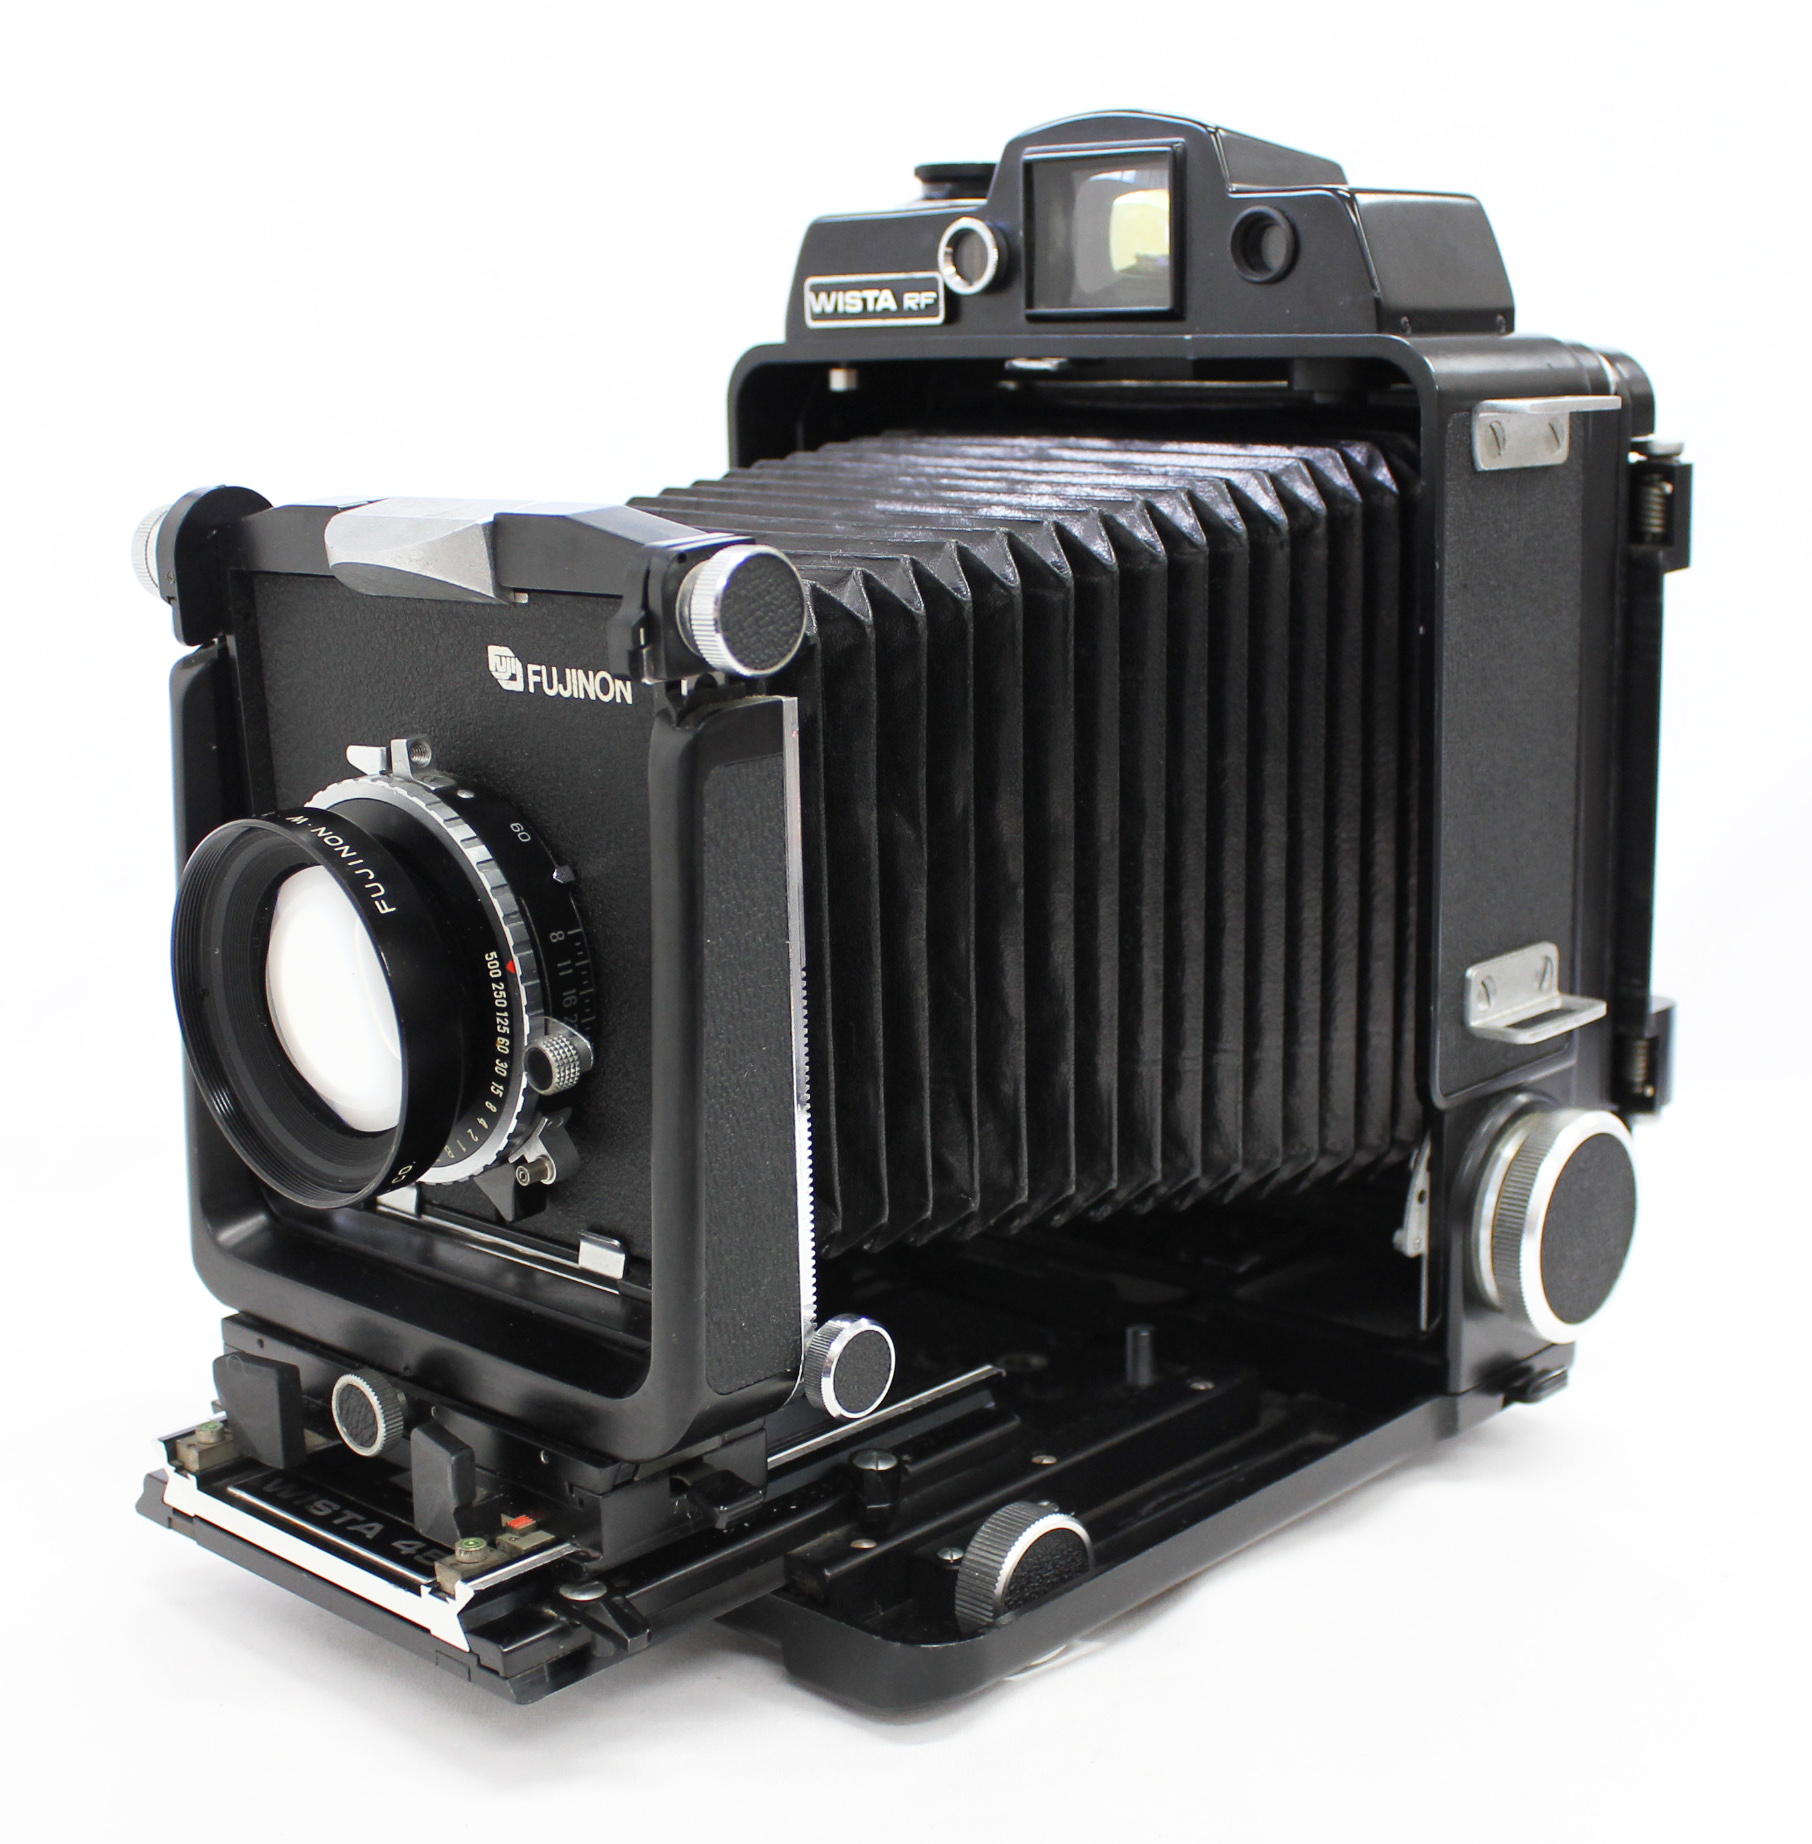  Wista 45RF 4x5 Rangefinder Large Format Camera w/ Bonus Lens Fujinon W 150mm F/5.6 from Japan Photo 0